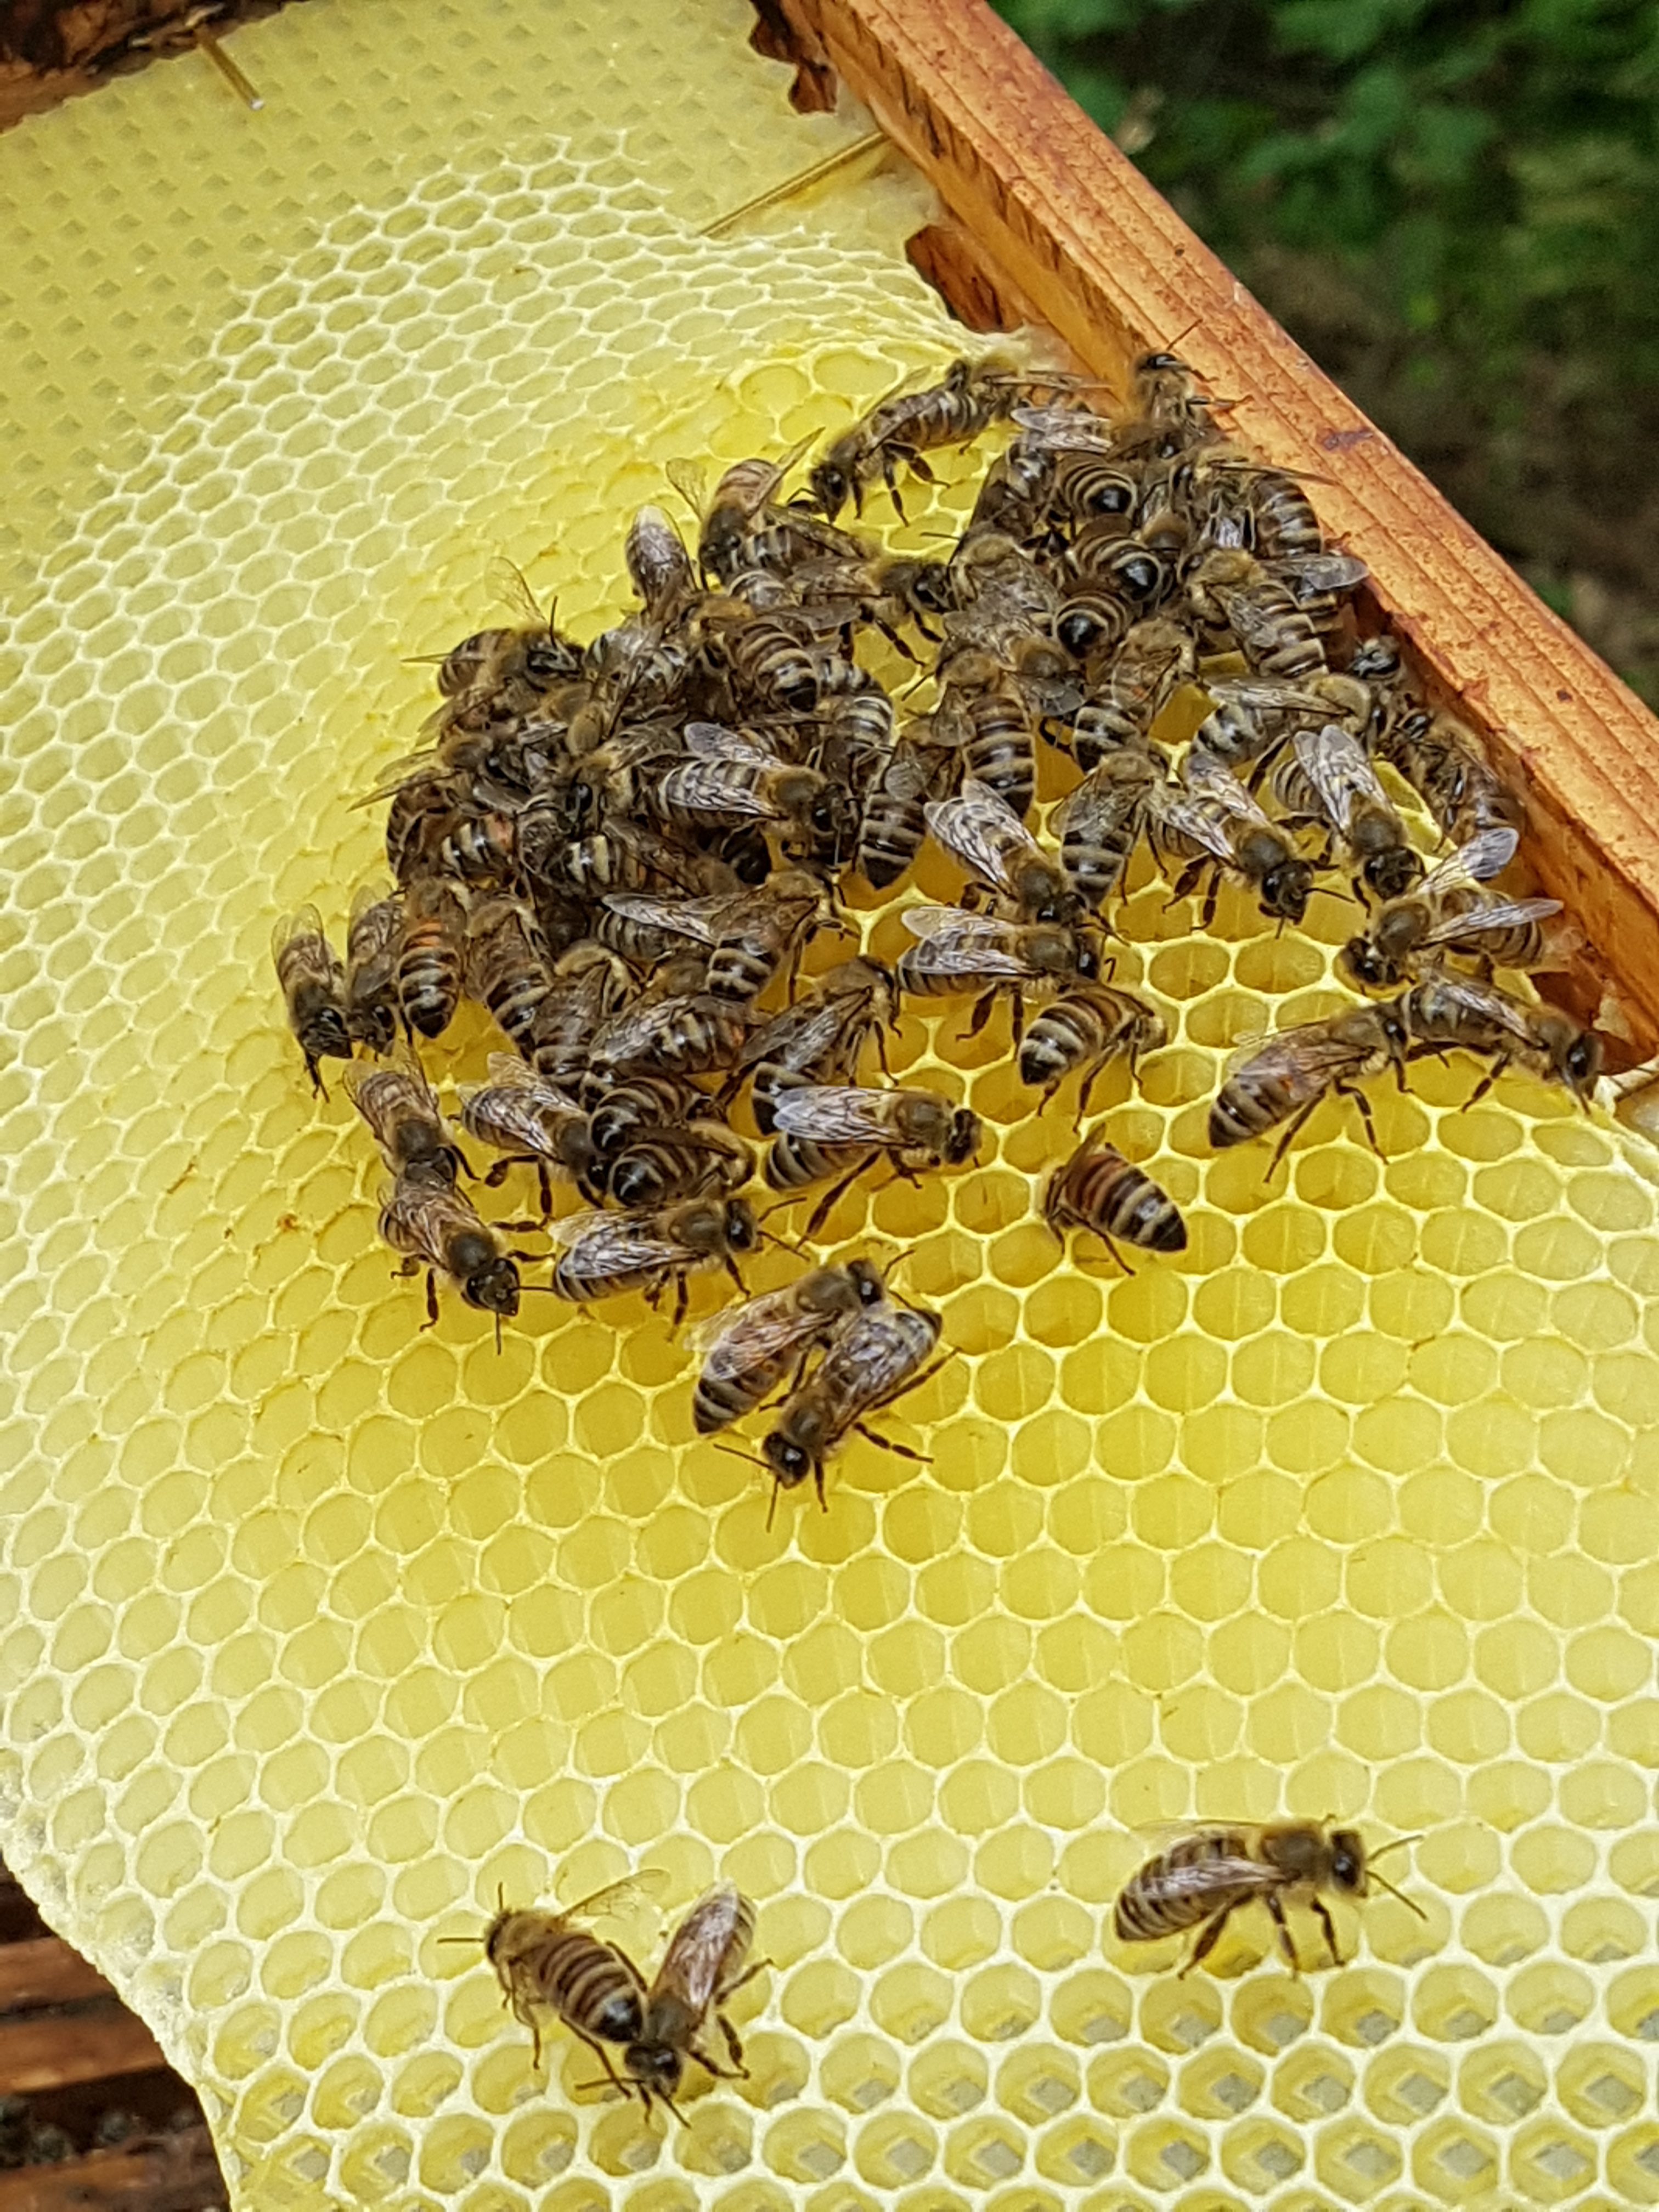 Bier i hagen og 10 spørsmål til en birøkter - SkarpiHagen